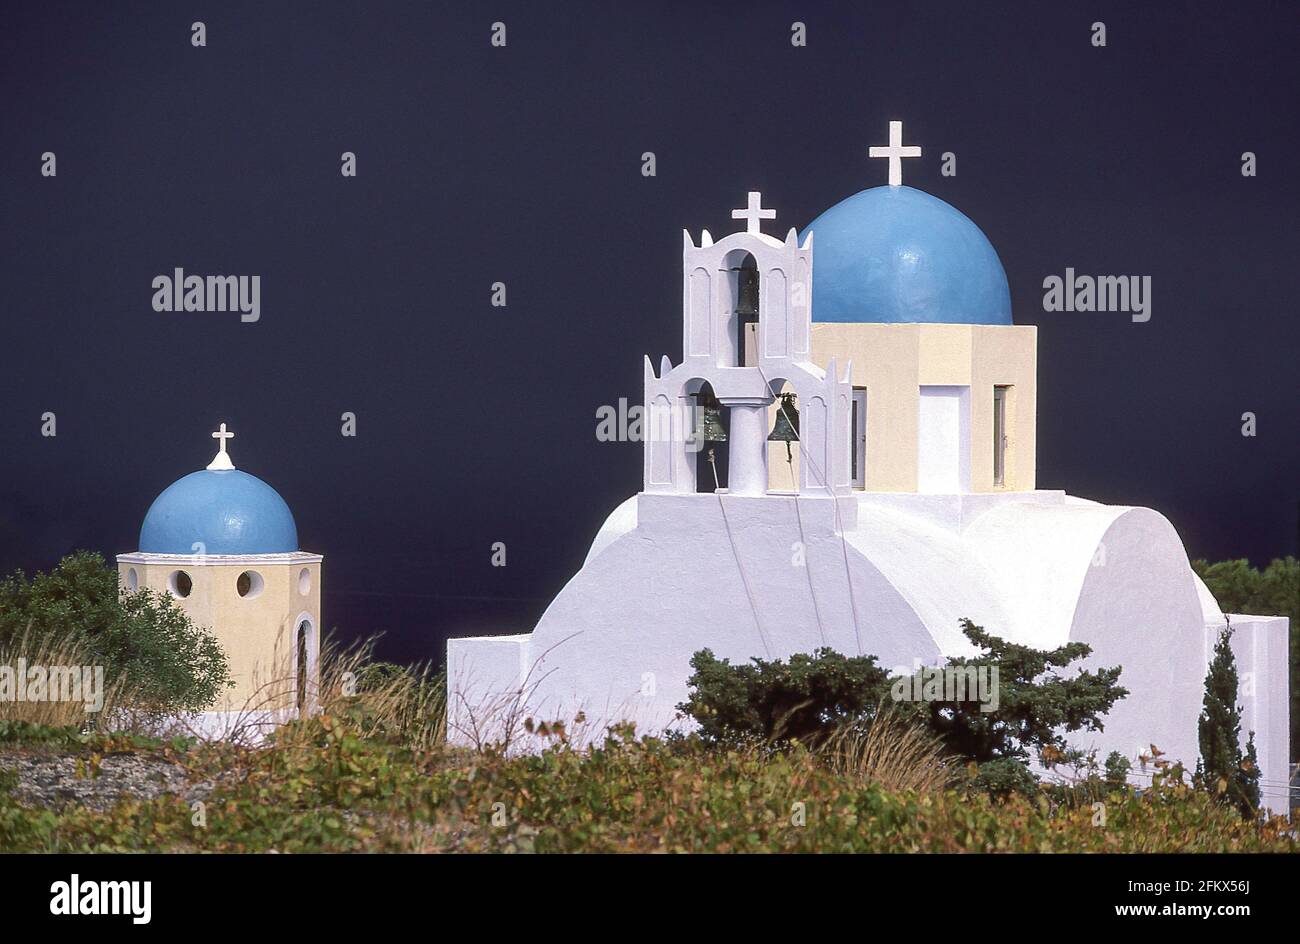 Sonnenbeleuchtete Kirche mit dunklen Sturmwolken dahinter, Fira, Santorini, die Kykladen, Südägäis, Griechenland Stockfoto